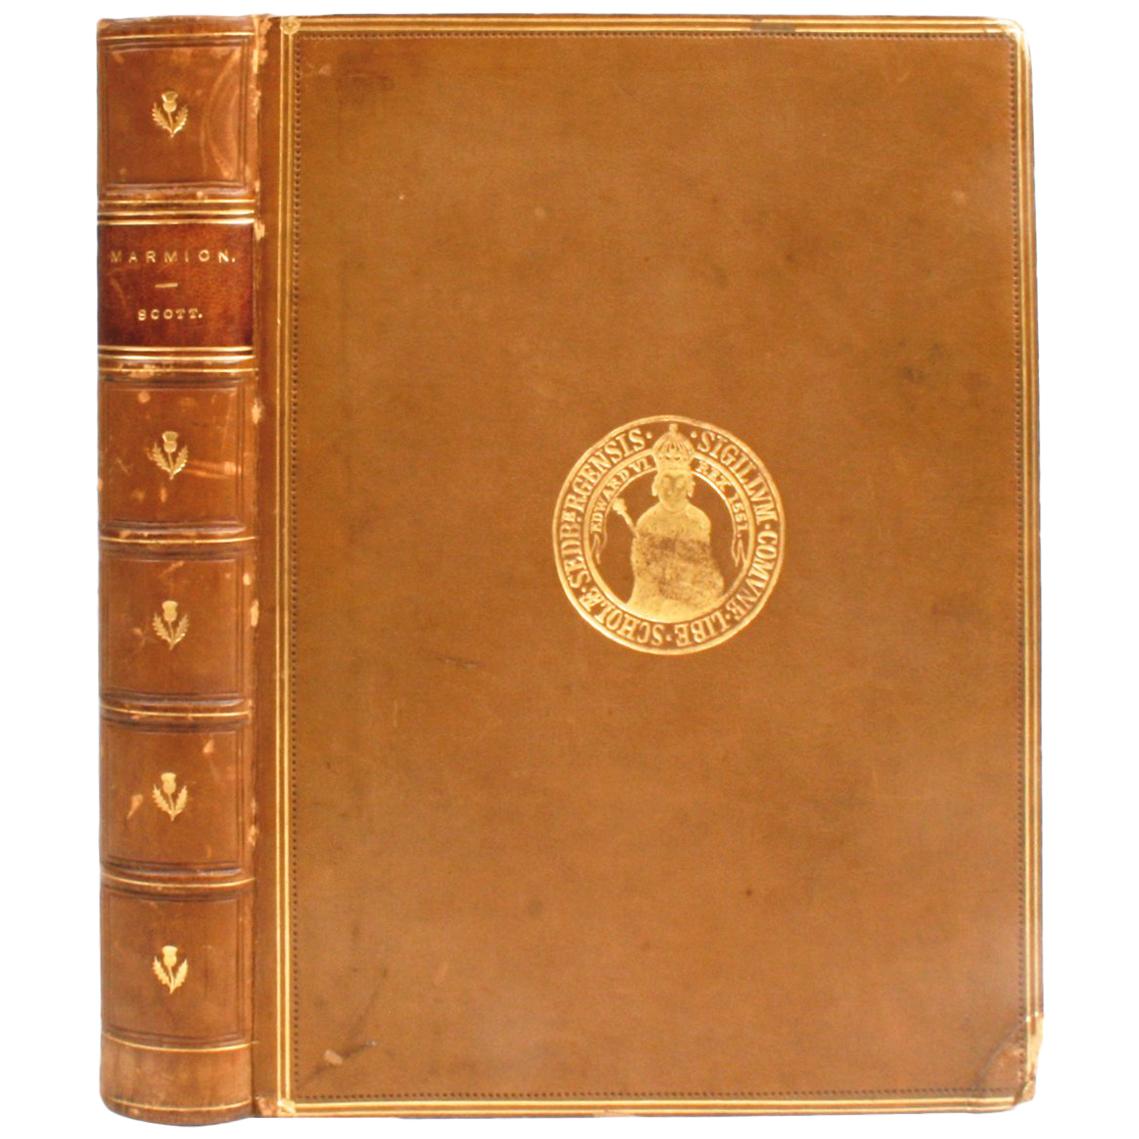 Marmion by Sir Walter Scott, Bart, 1885